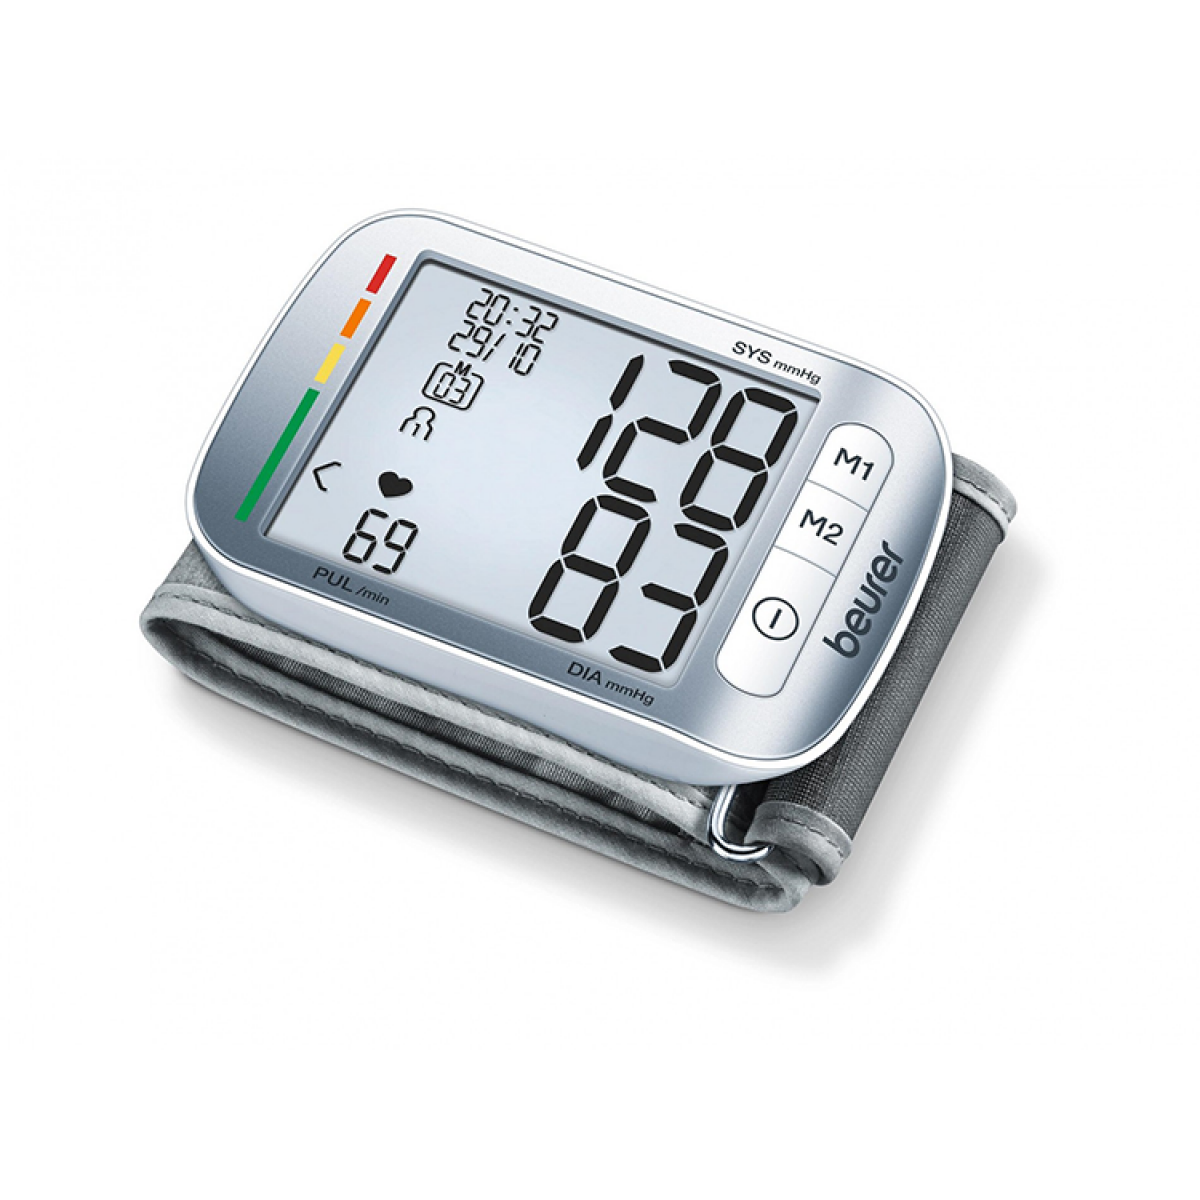 Beurer Bluetooth Wrist Blood Pressure Monitor BC54